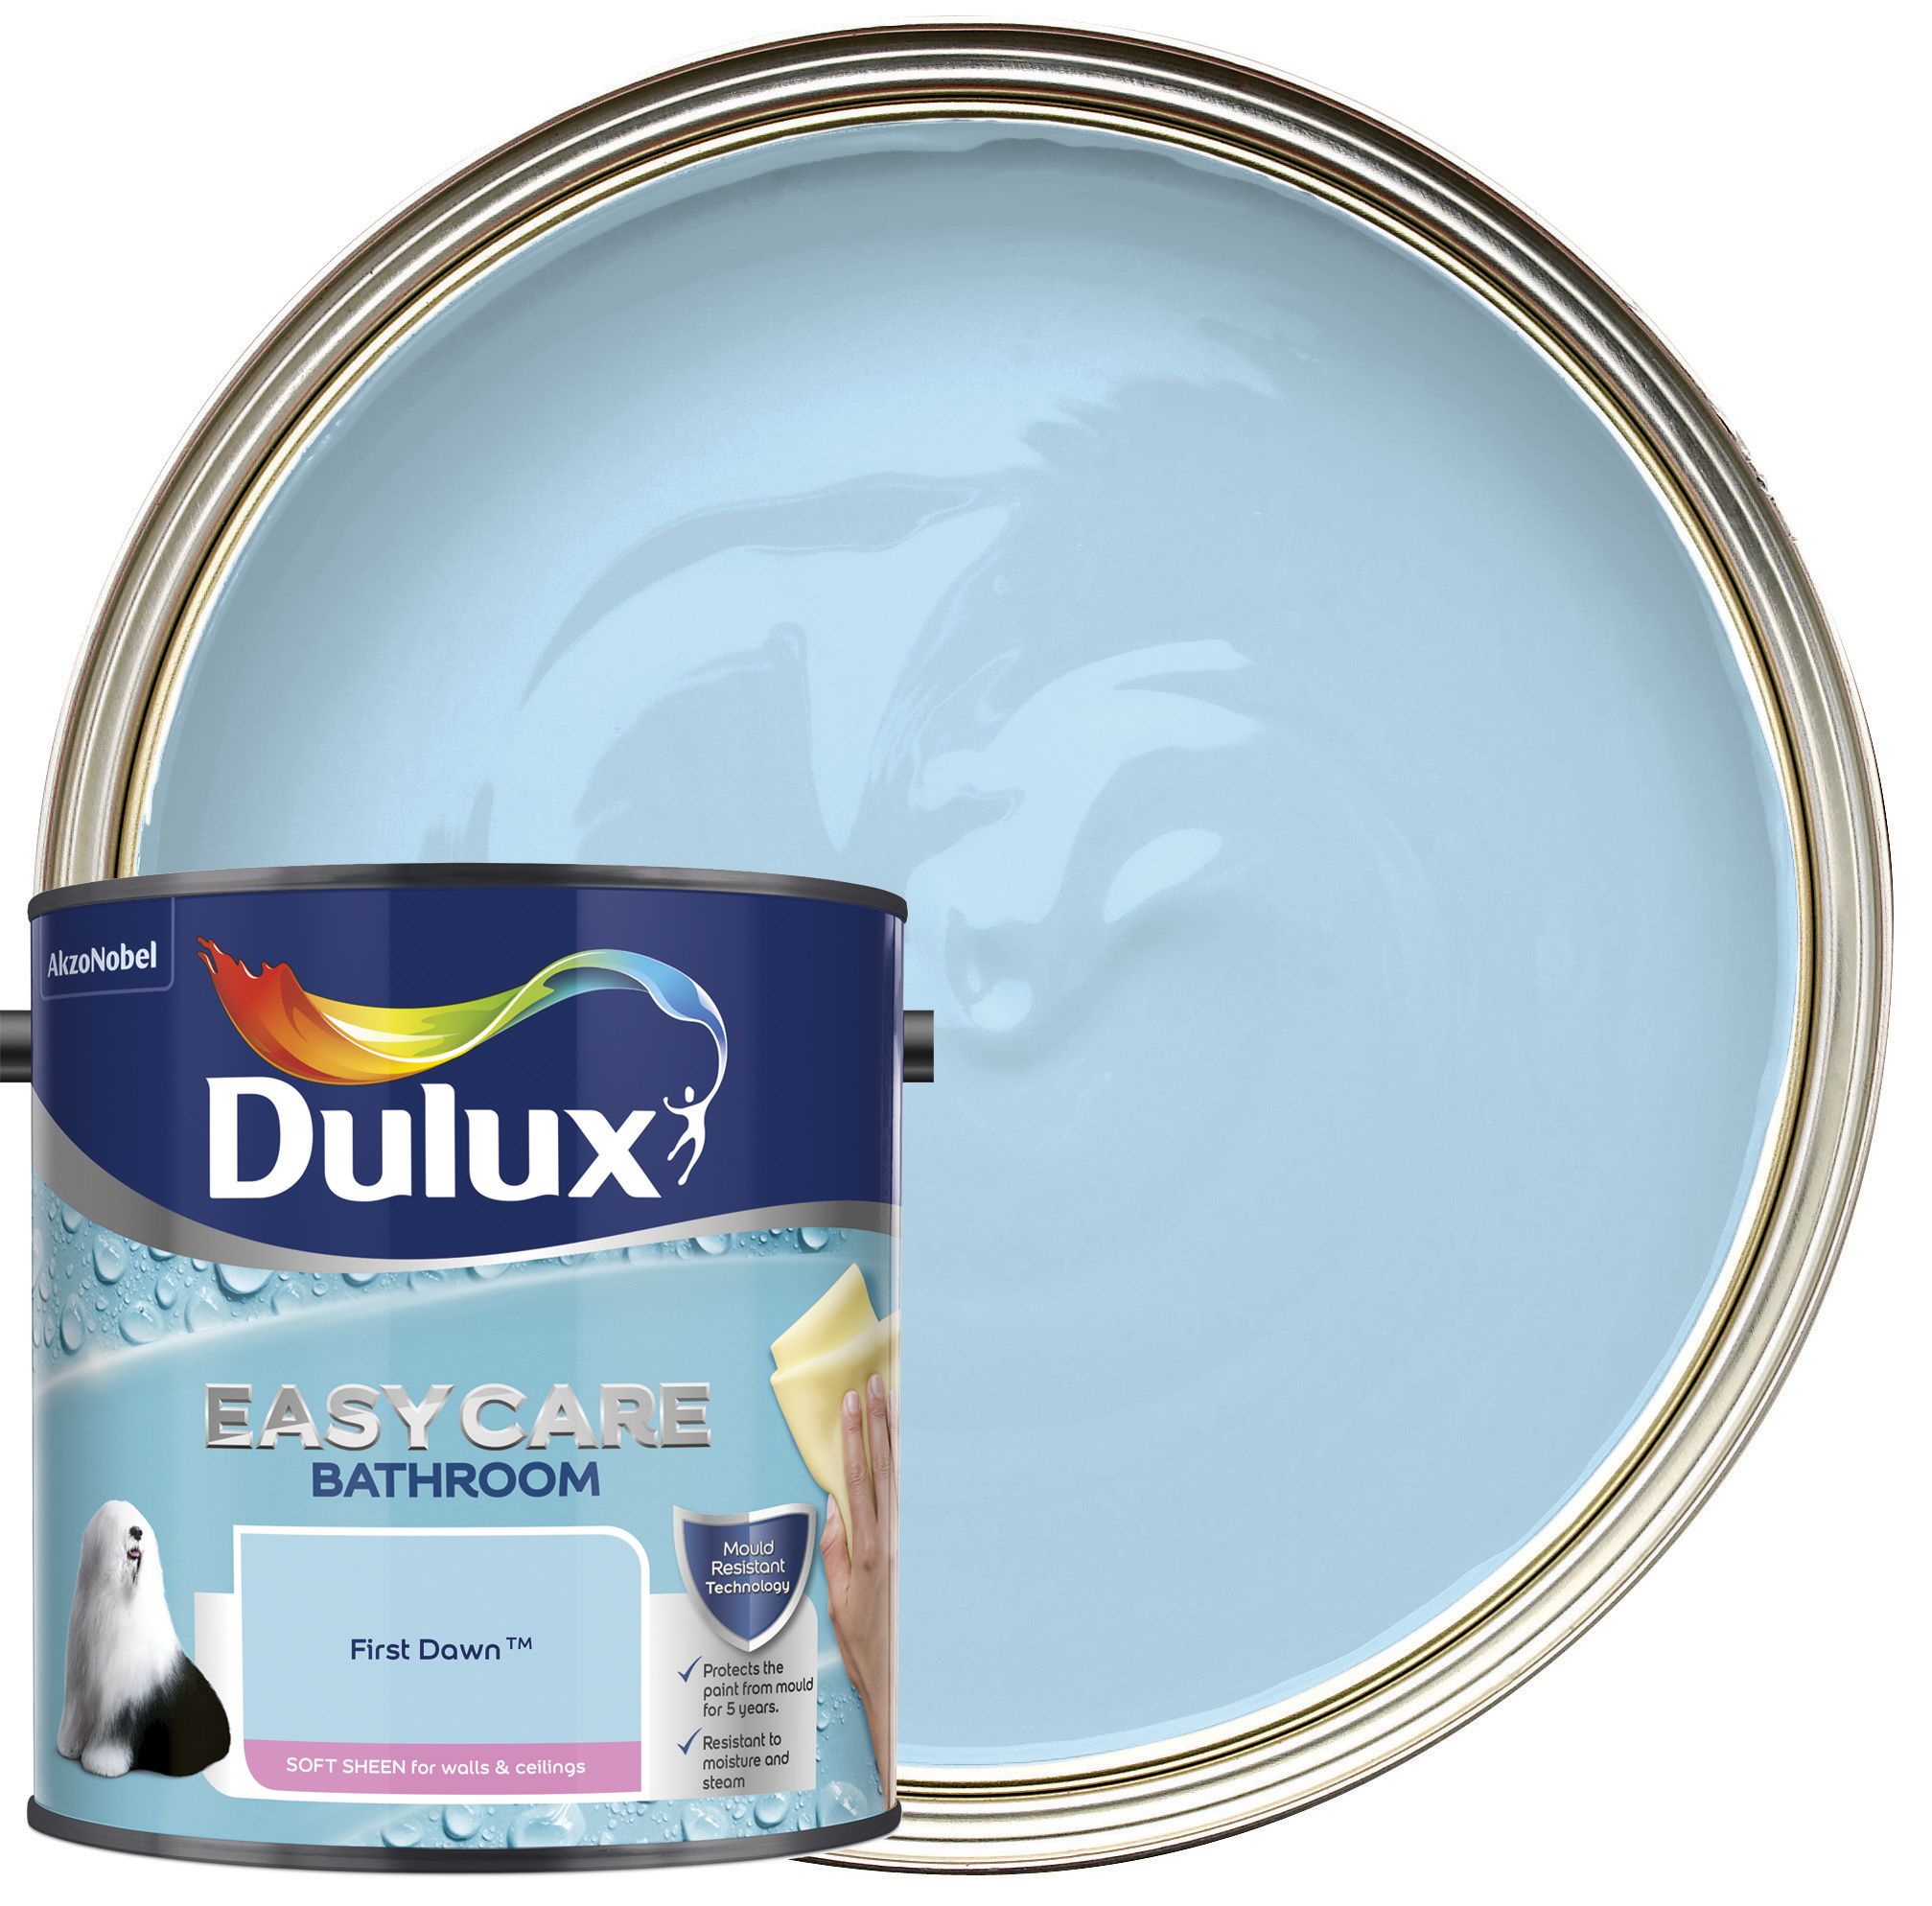 Dulux Easycare Bathroom Soft Sheen Emulsion Paint - First Dawn - 2.5L